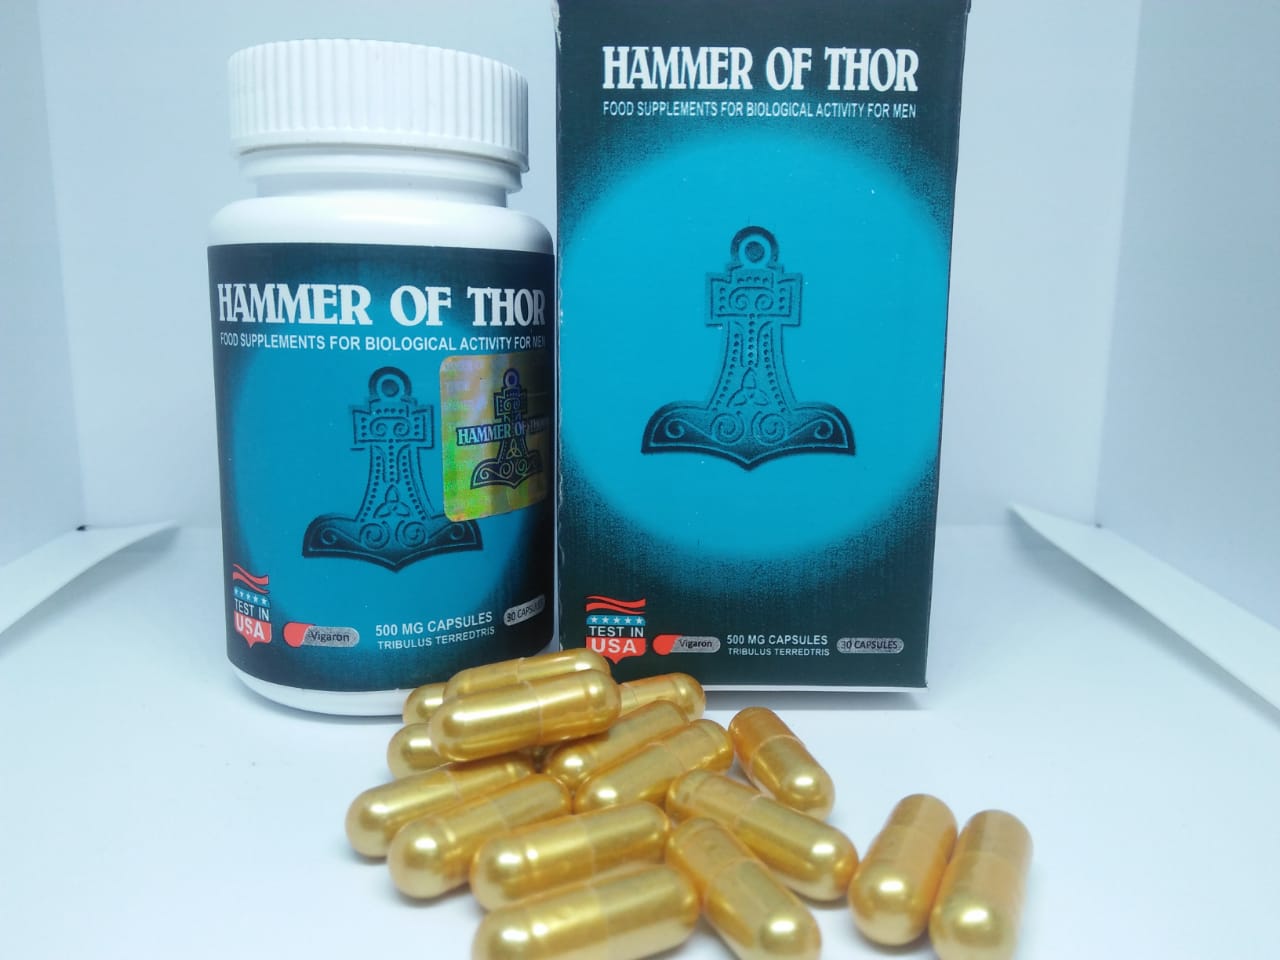 Hammer of thor capsules in Pakistan